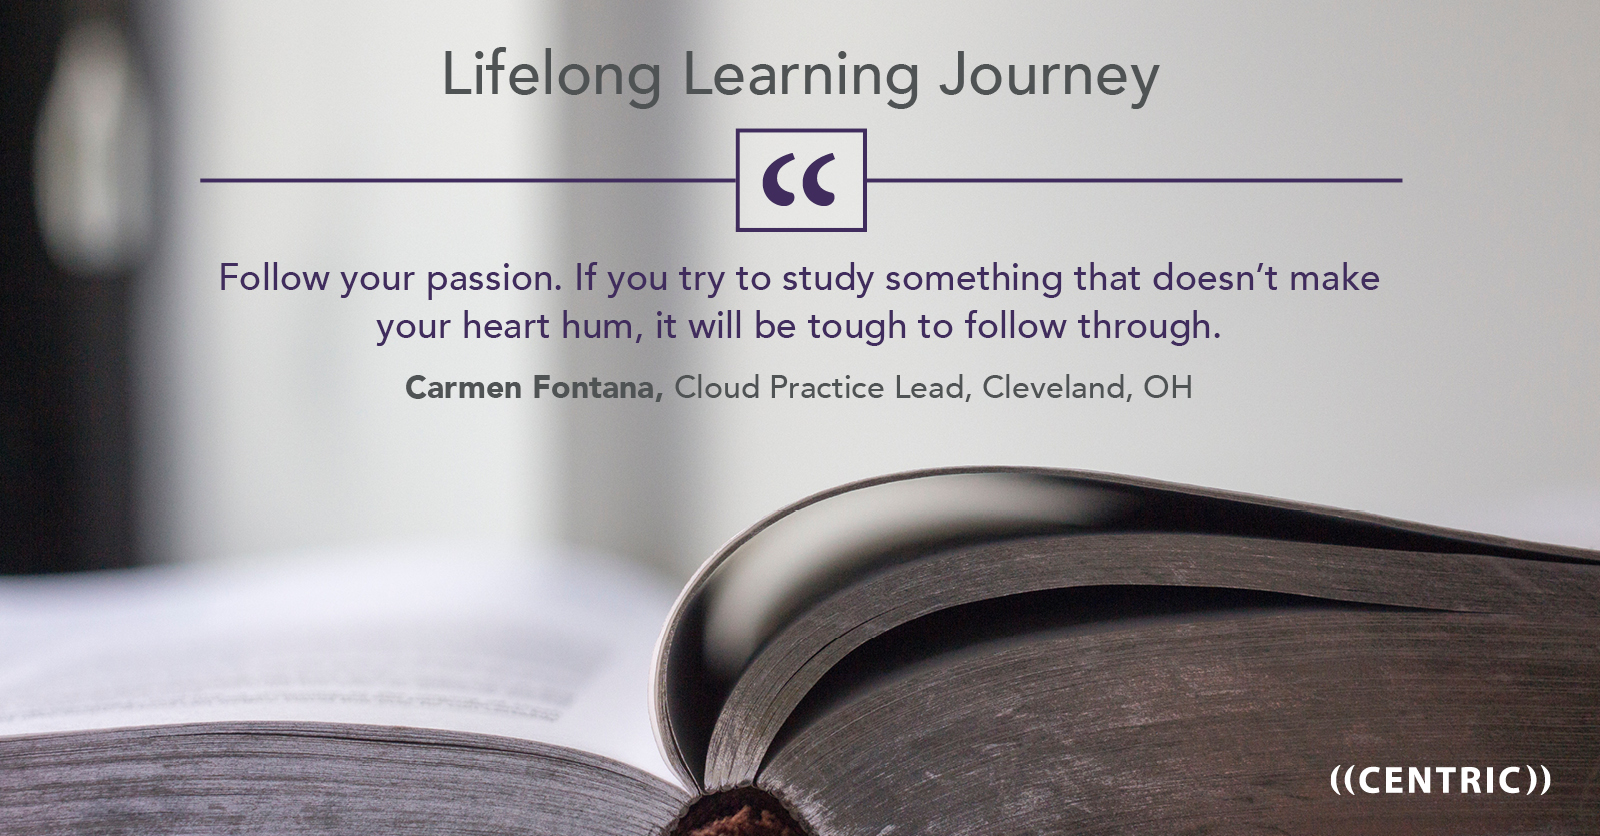 Lifelong Learner Journey 7 Questions For Centrics Carmen Fontana